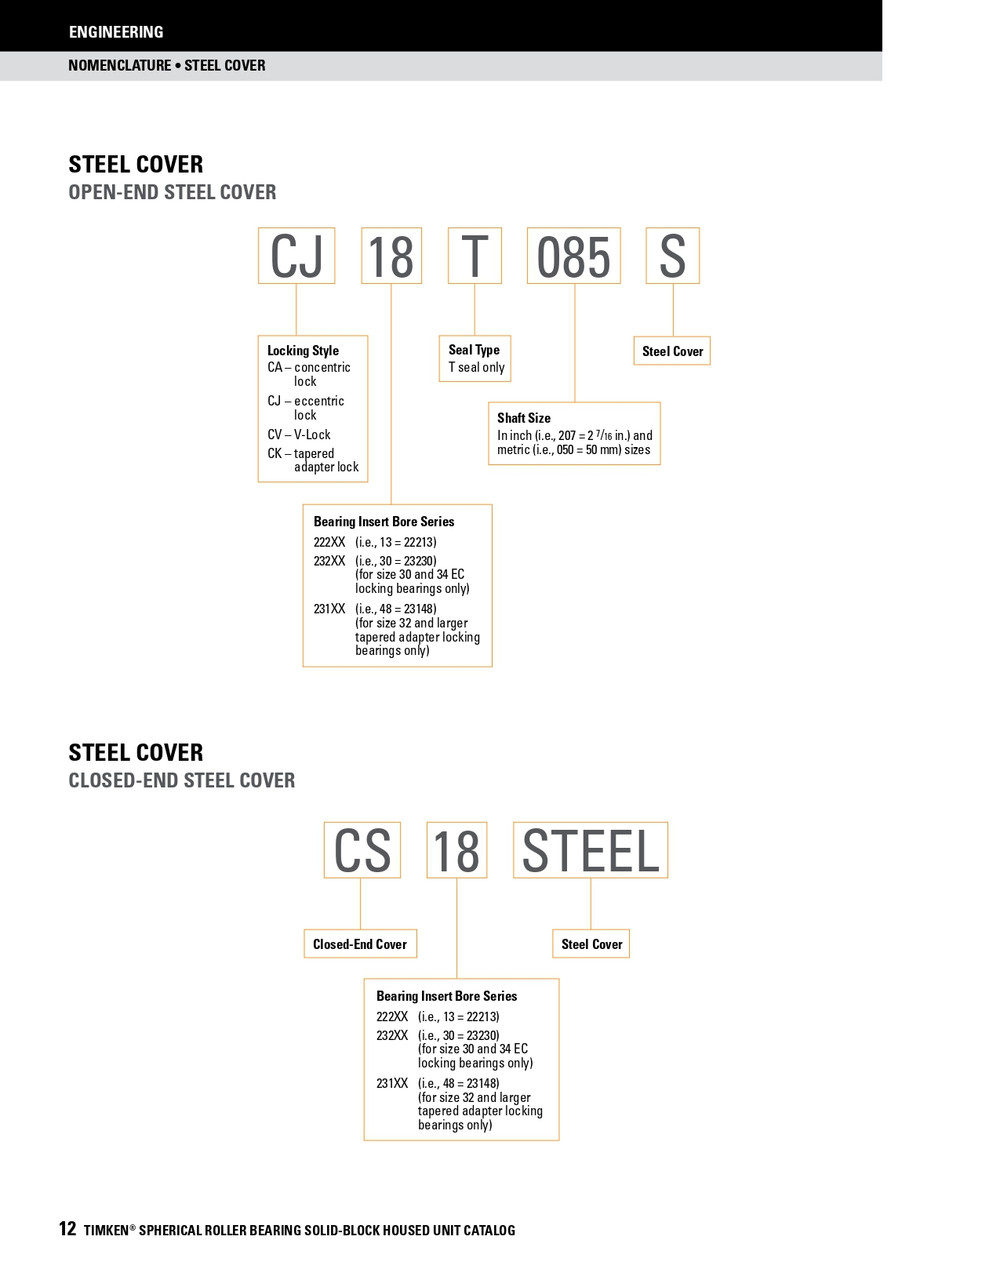 2-11/16" Timken SRB Steel Open End Cover w/Teflon Seal - QV V-Lock® Type   CV17T211S